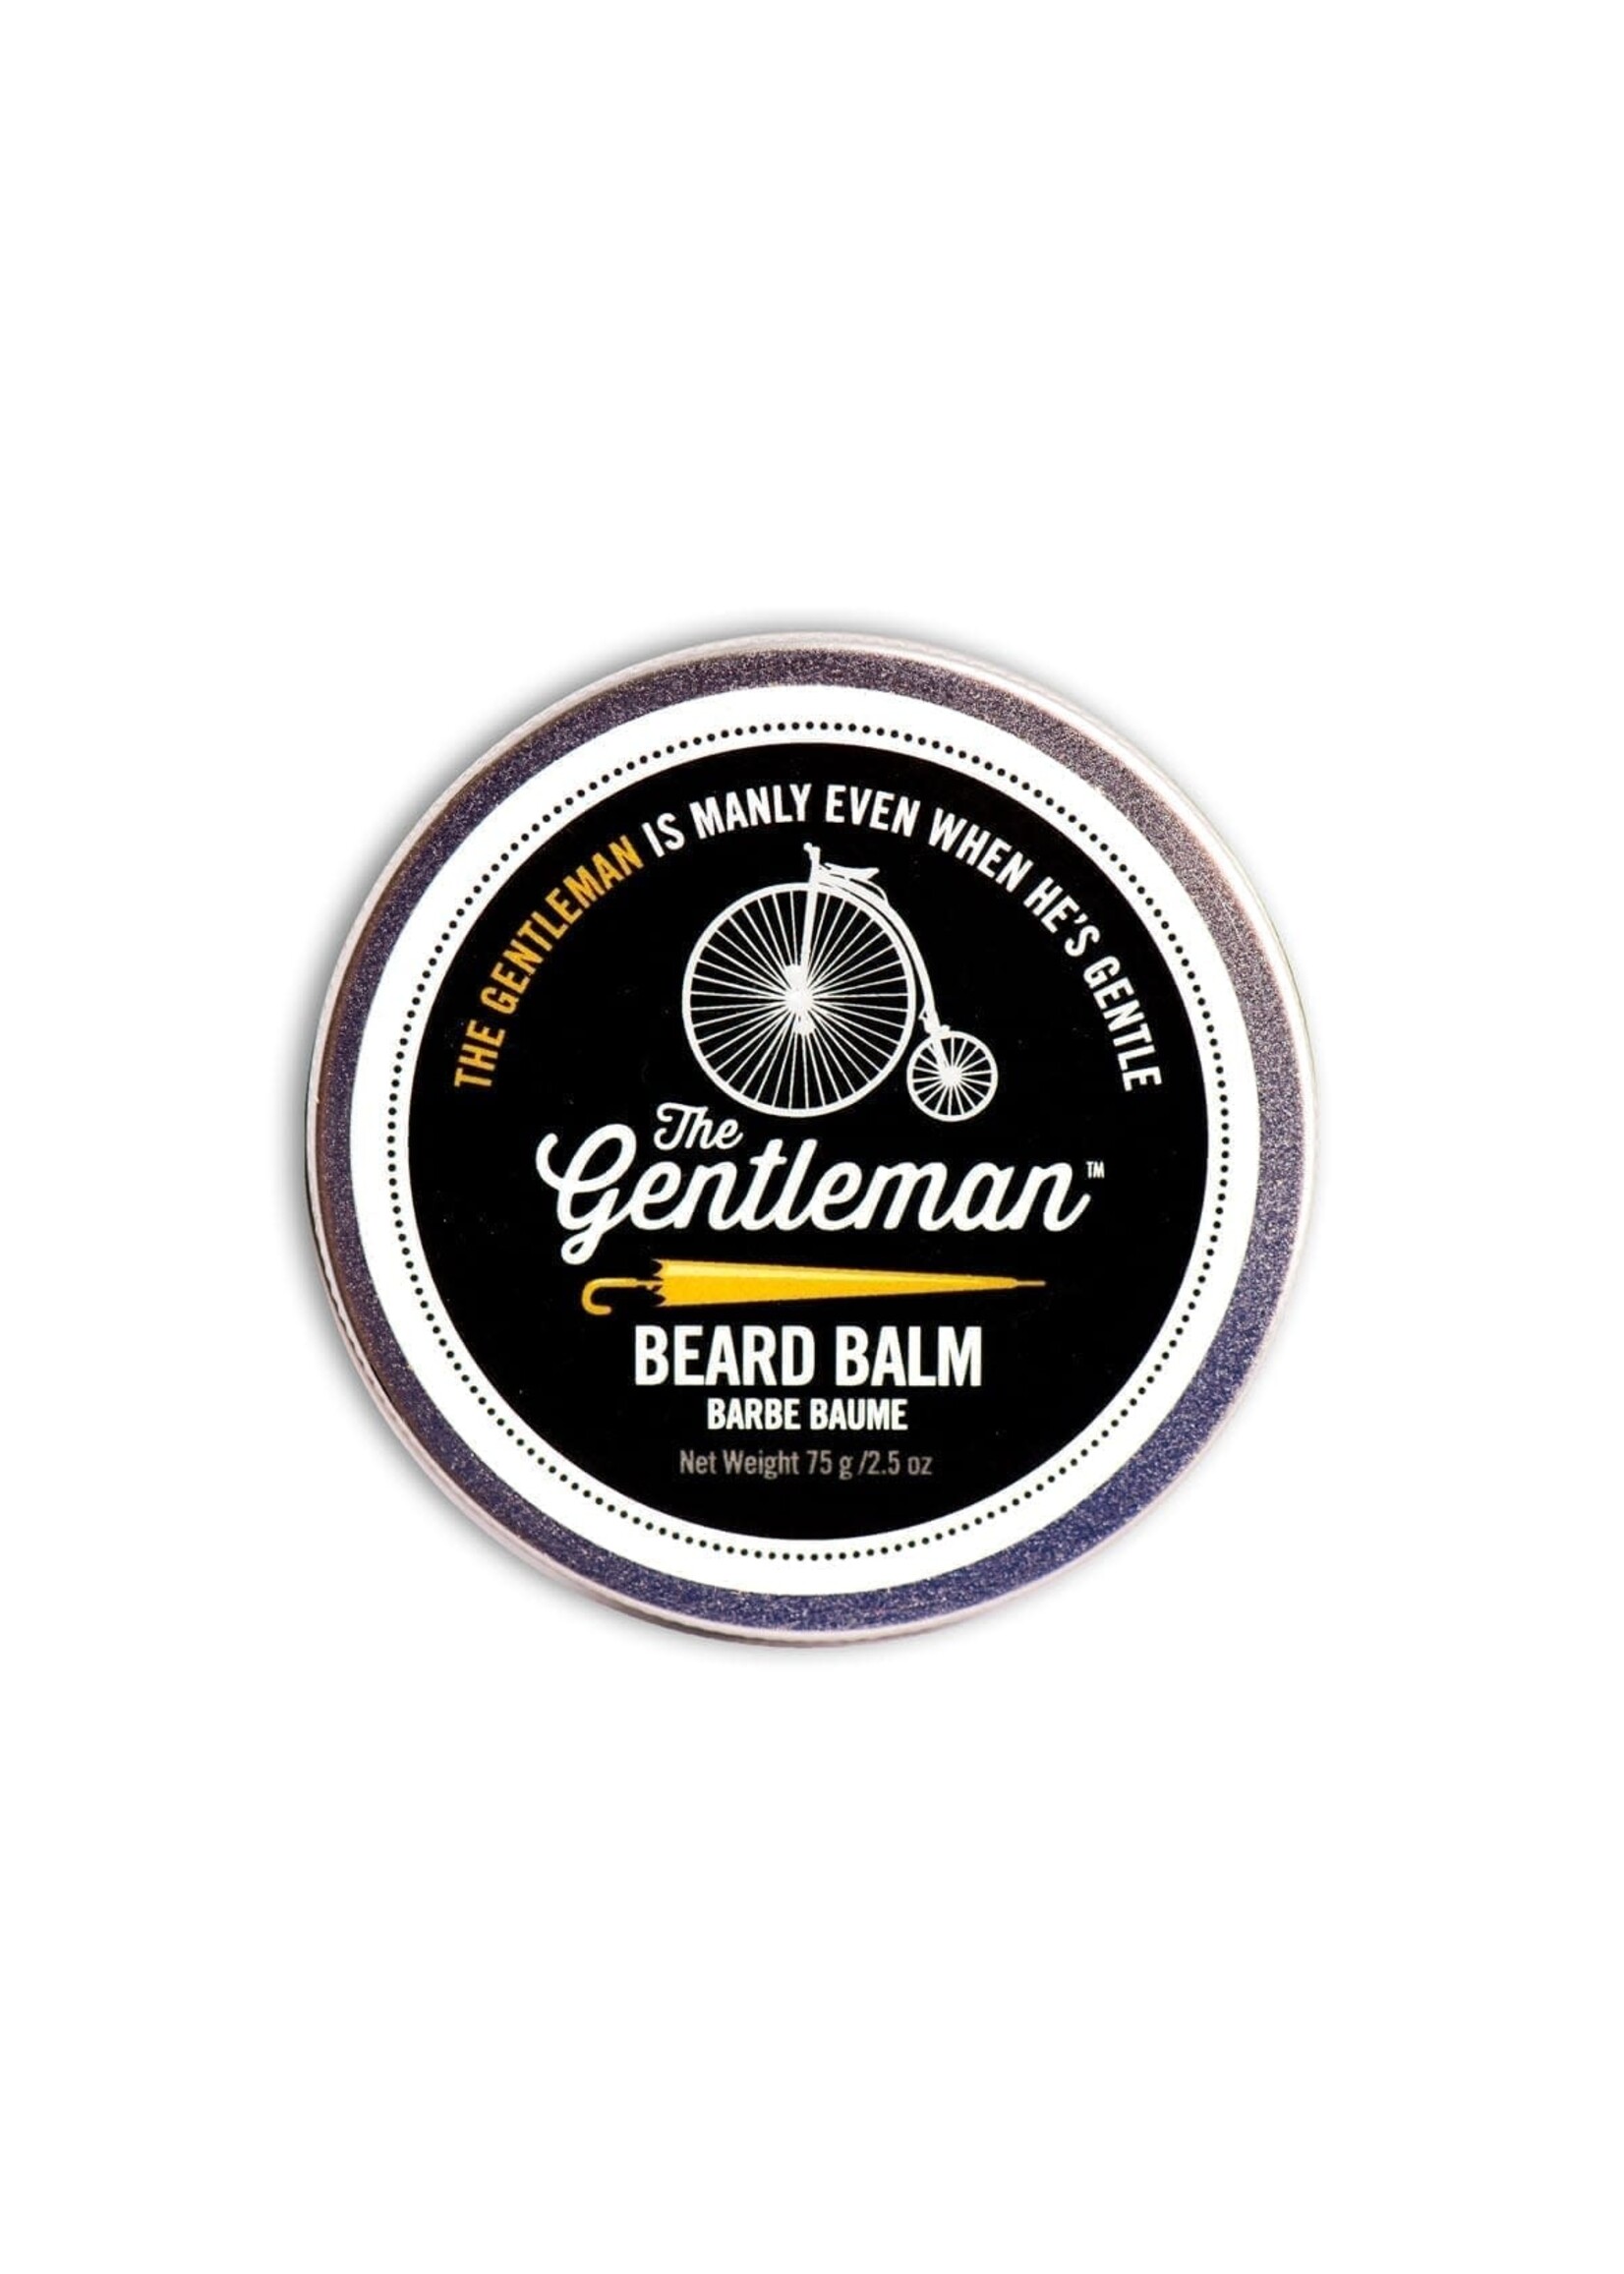 Walton Wood Farm "The Gentleman" Beard Balm